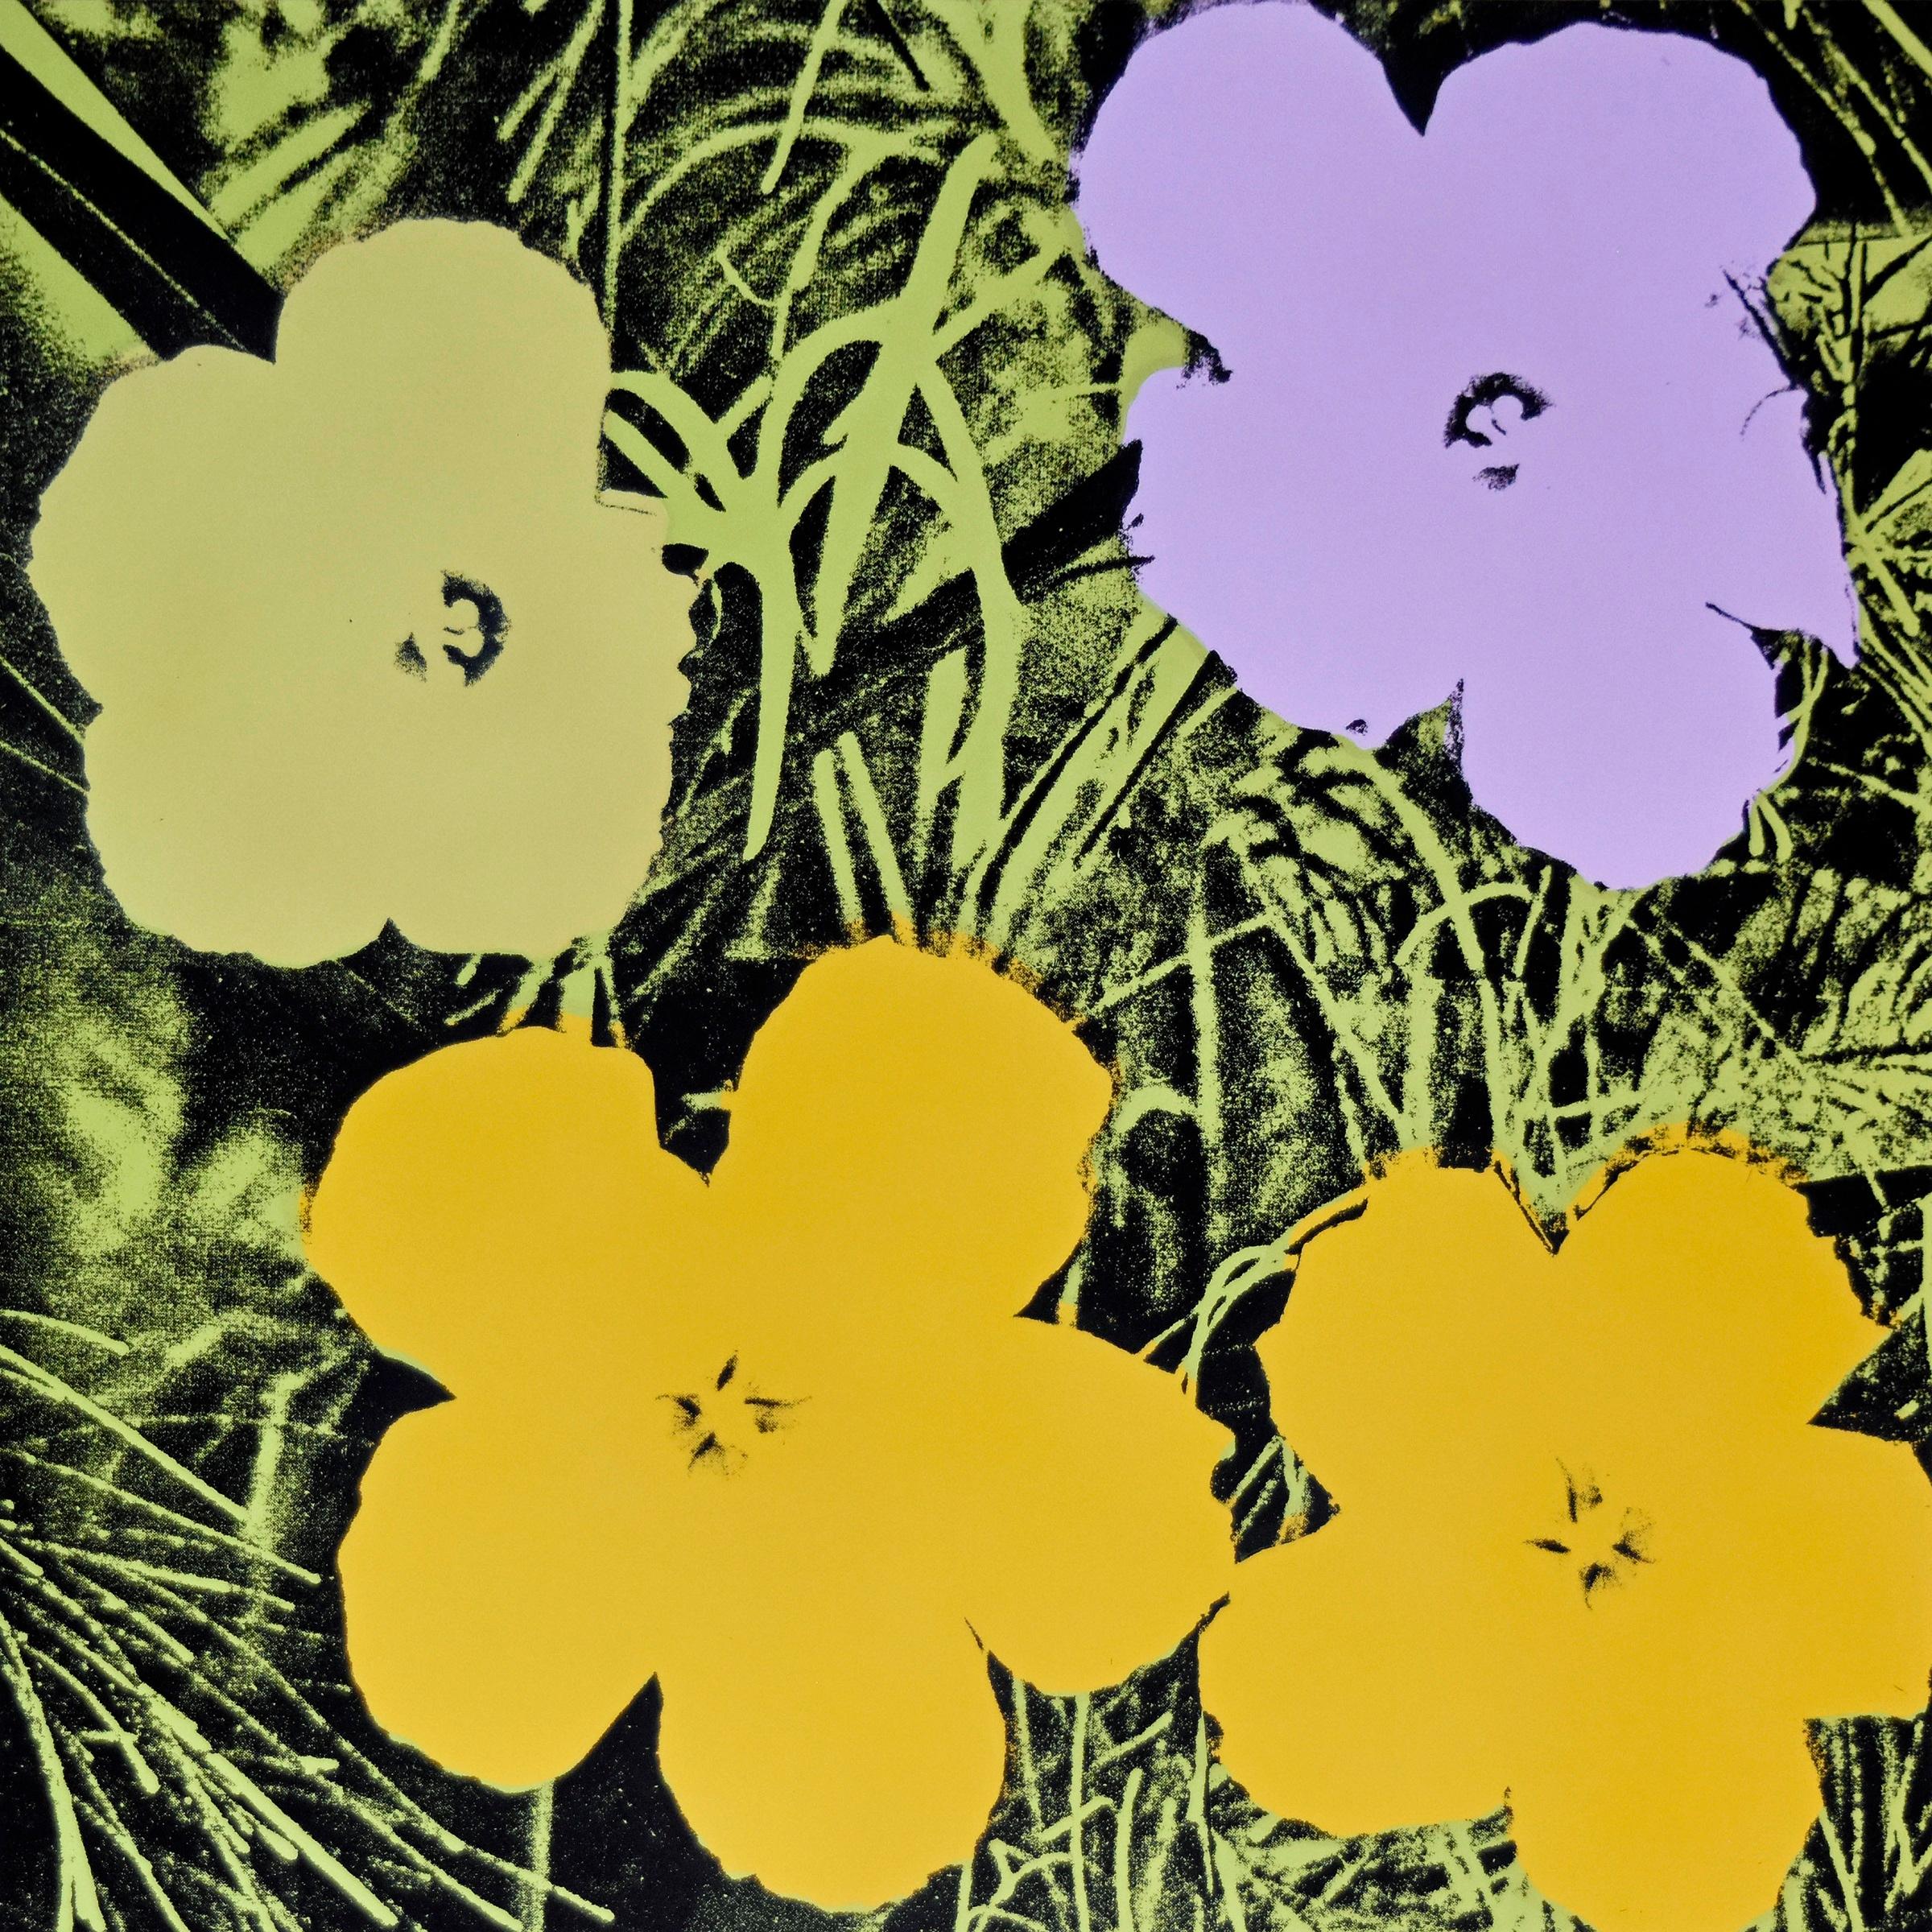 Andy Warhol Print - Flowers FS II.67